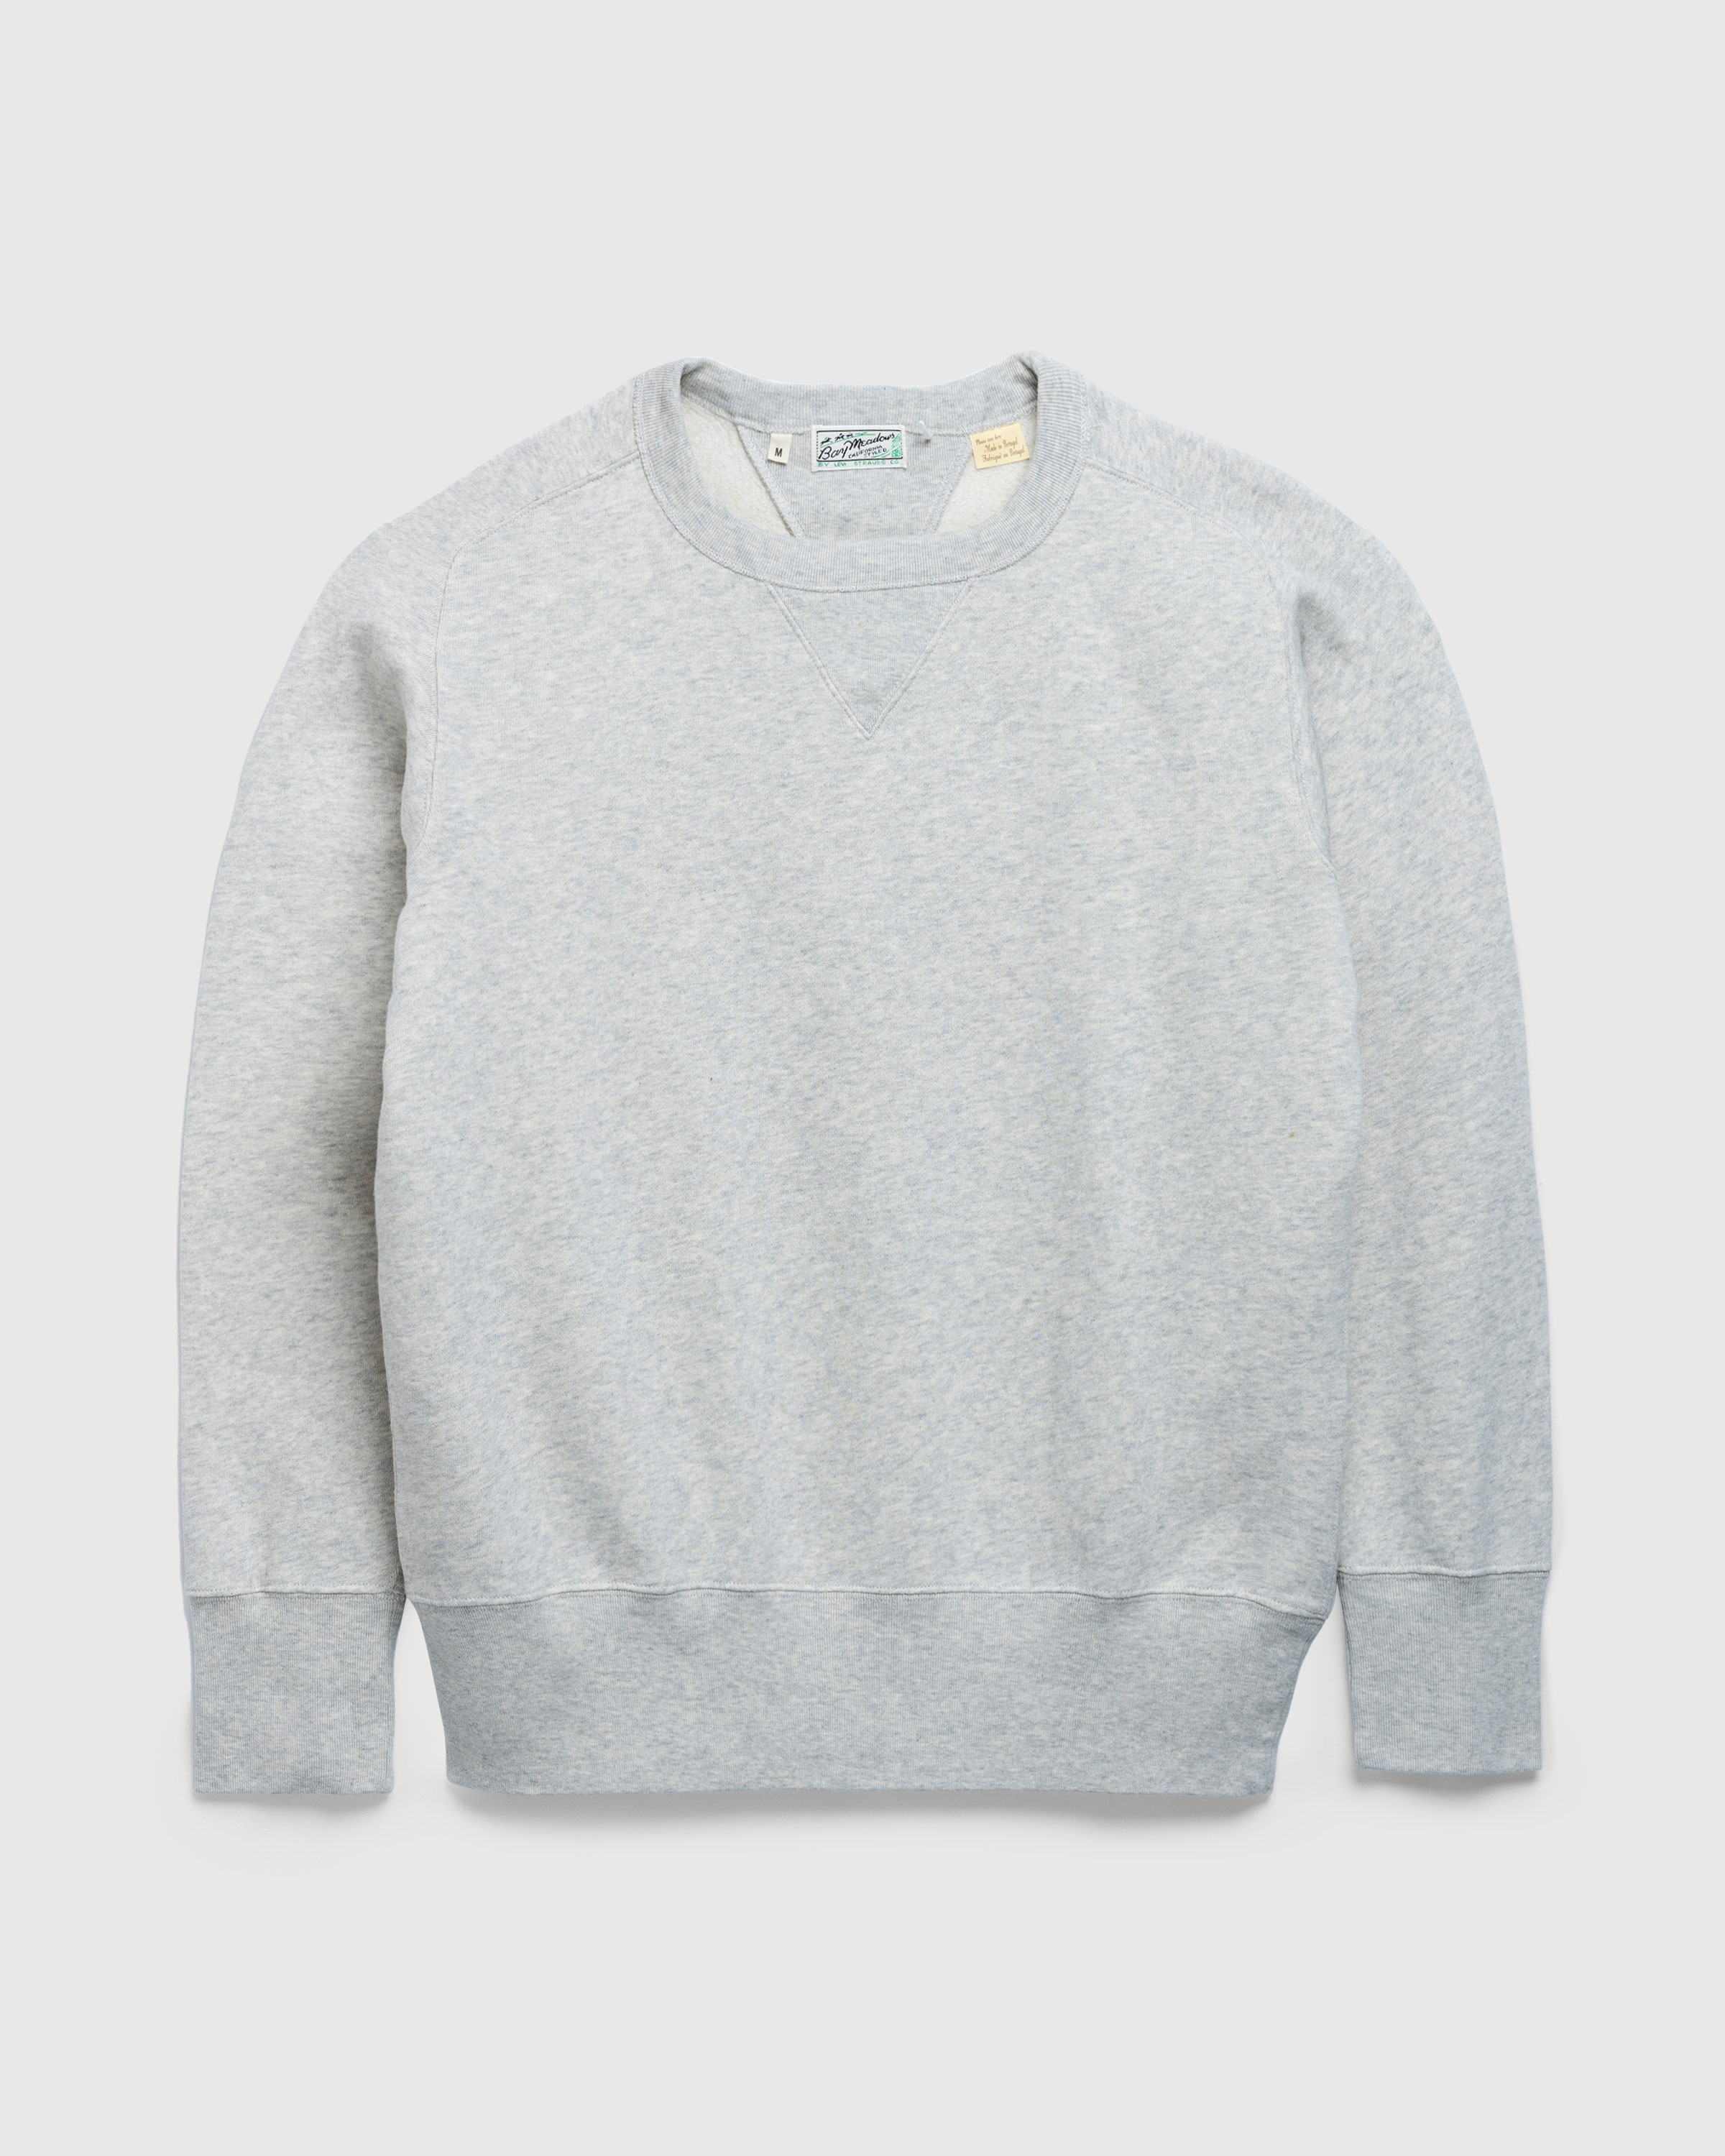 Levi's – Bay Meadows Crewneck Sweatshirt Oatmeal Mele - Longsleeve Shirts - Beige - Image 1